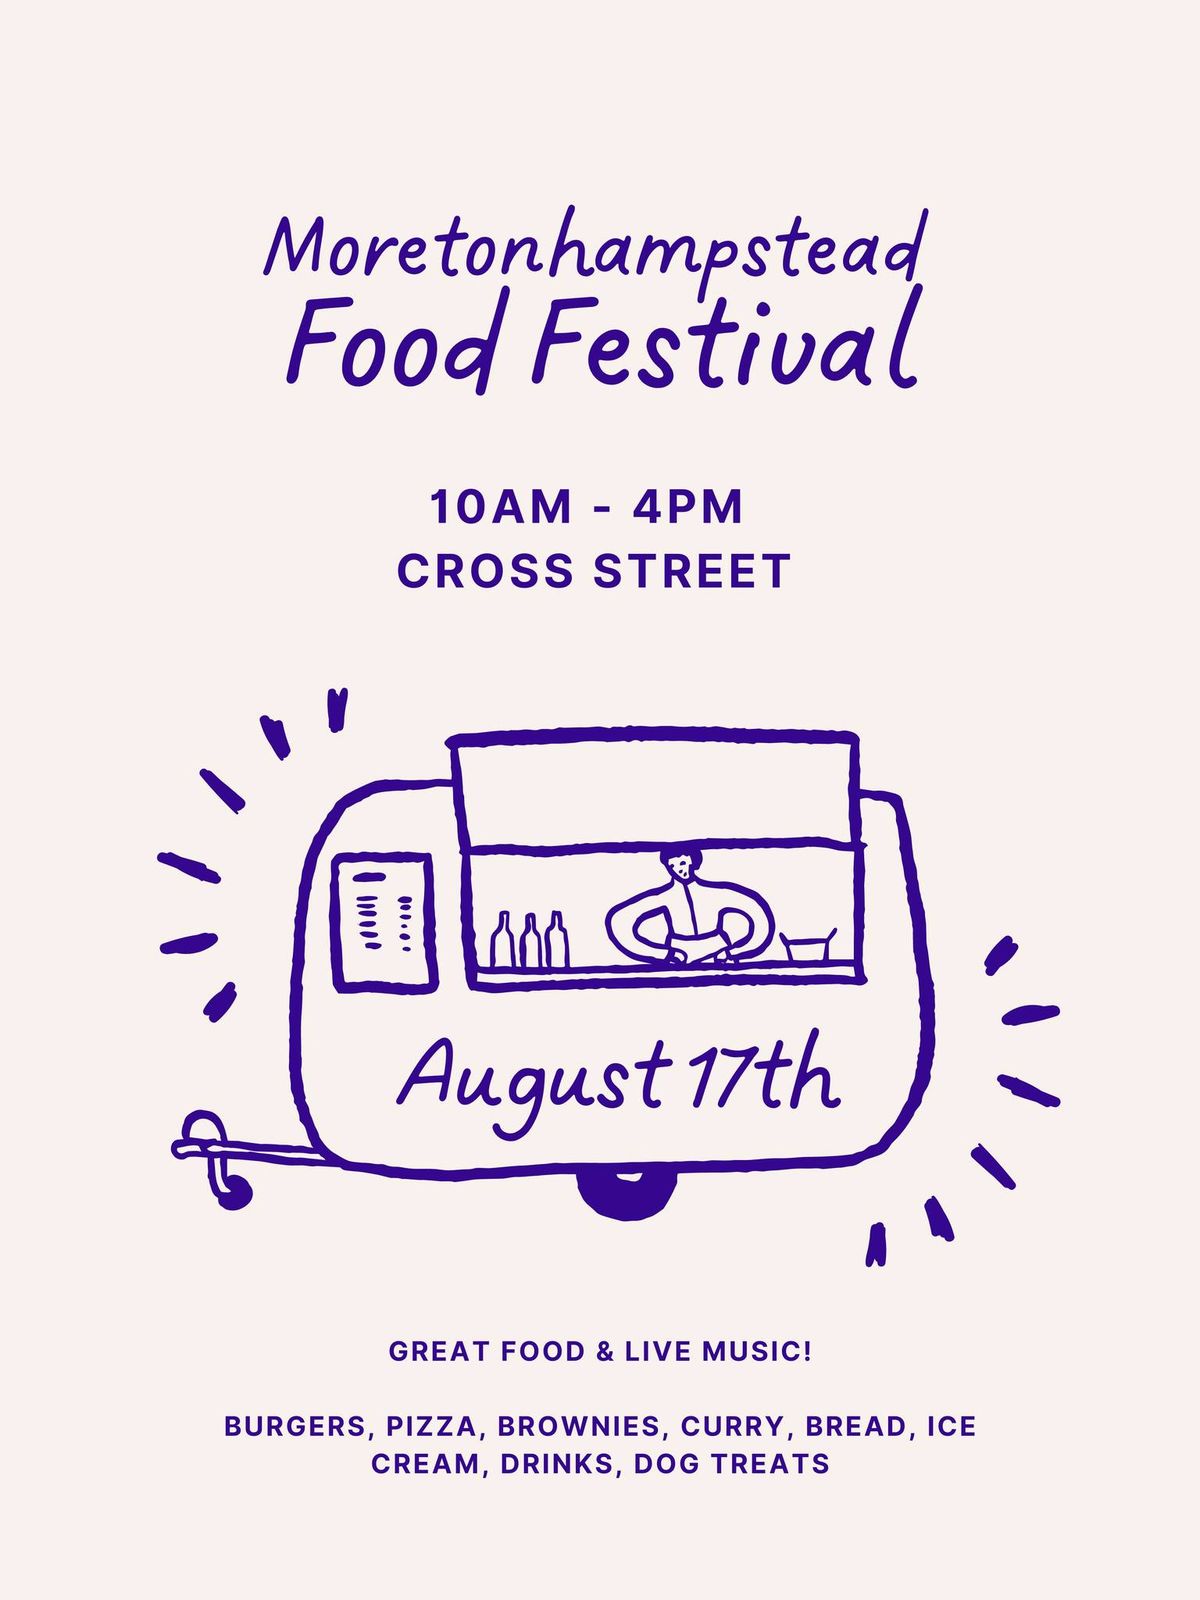 Moretonhampstead Carnival Food Festival 